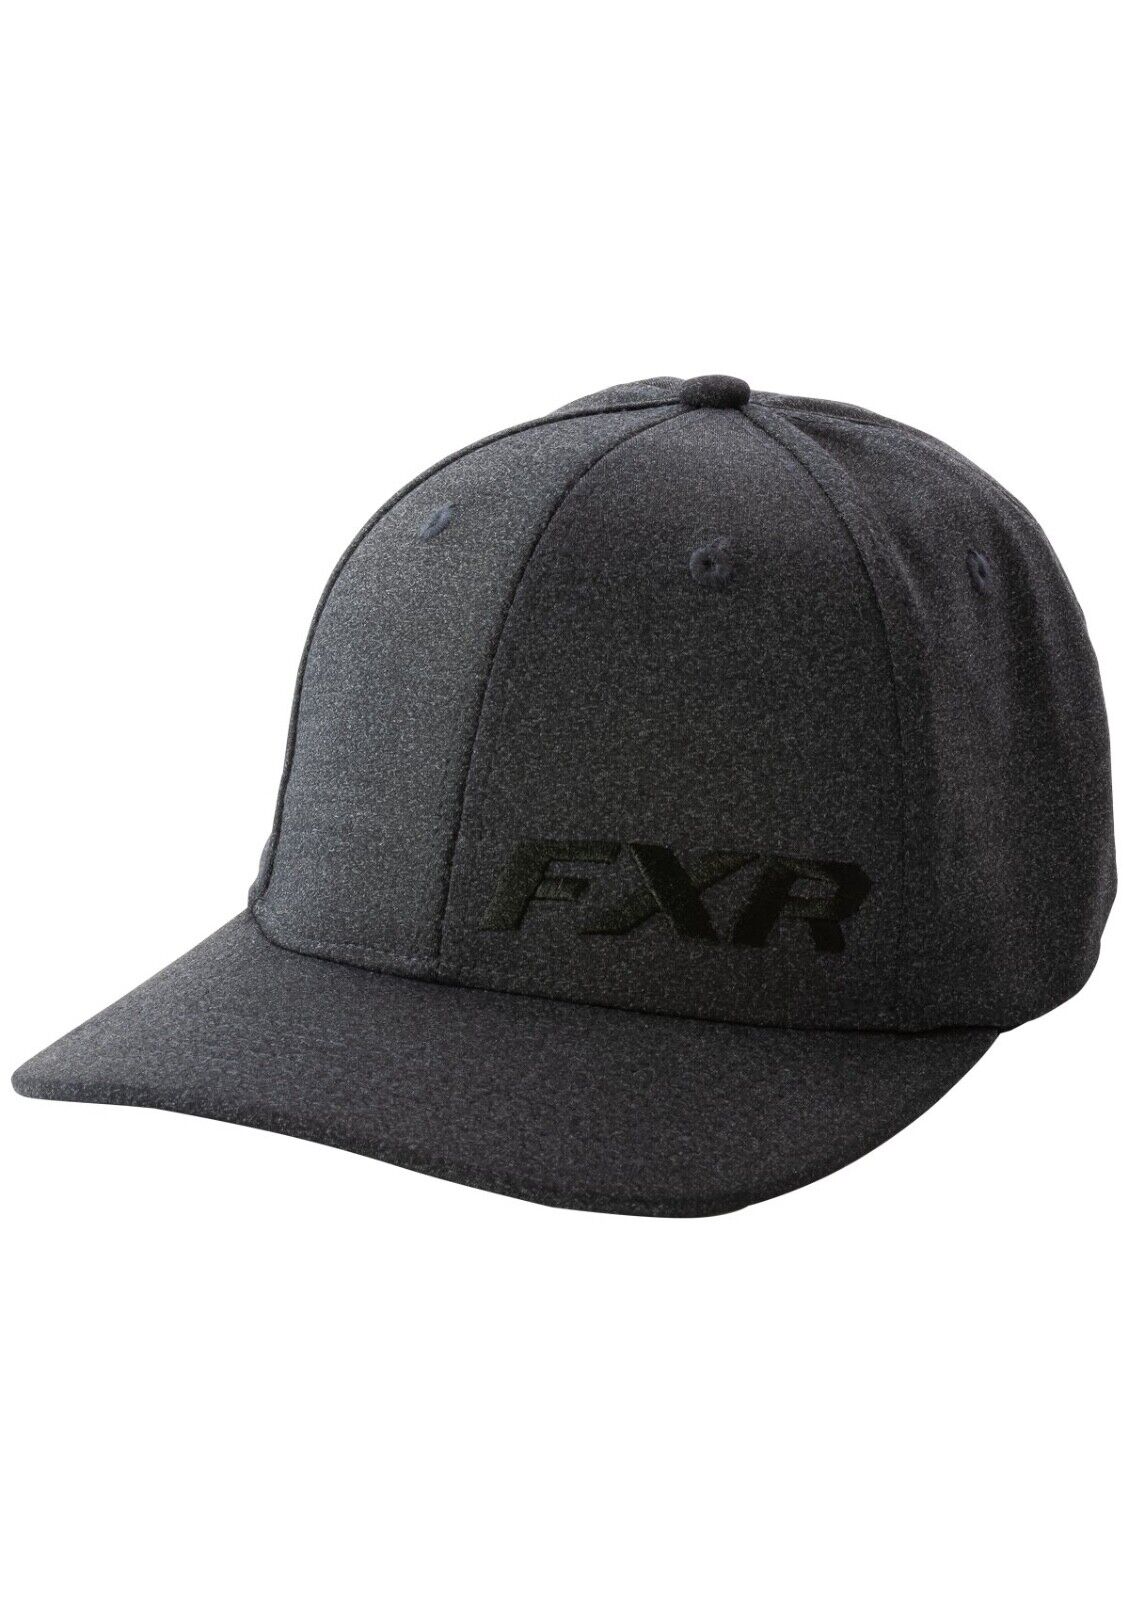 Official FXR Racing Cap - 201922-0710